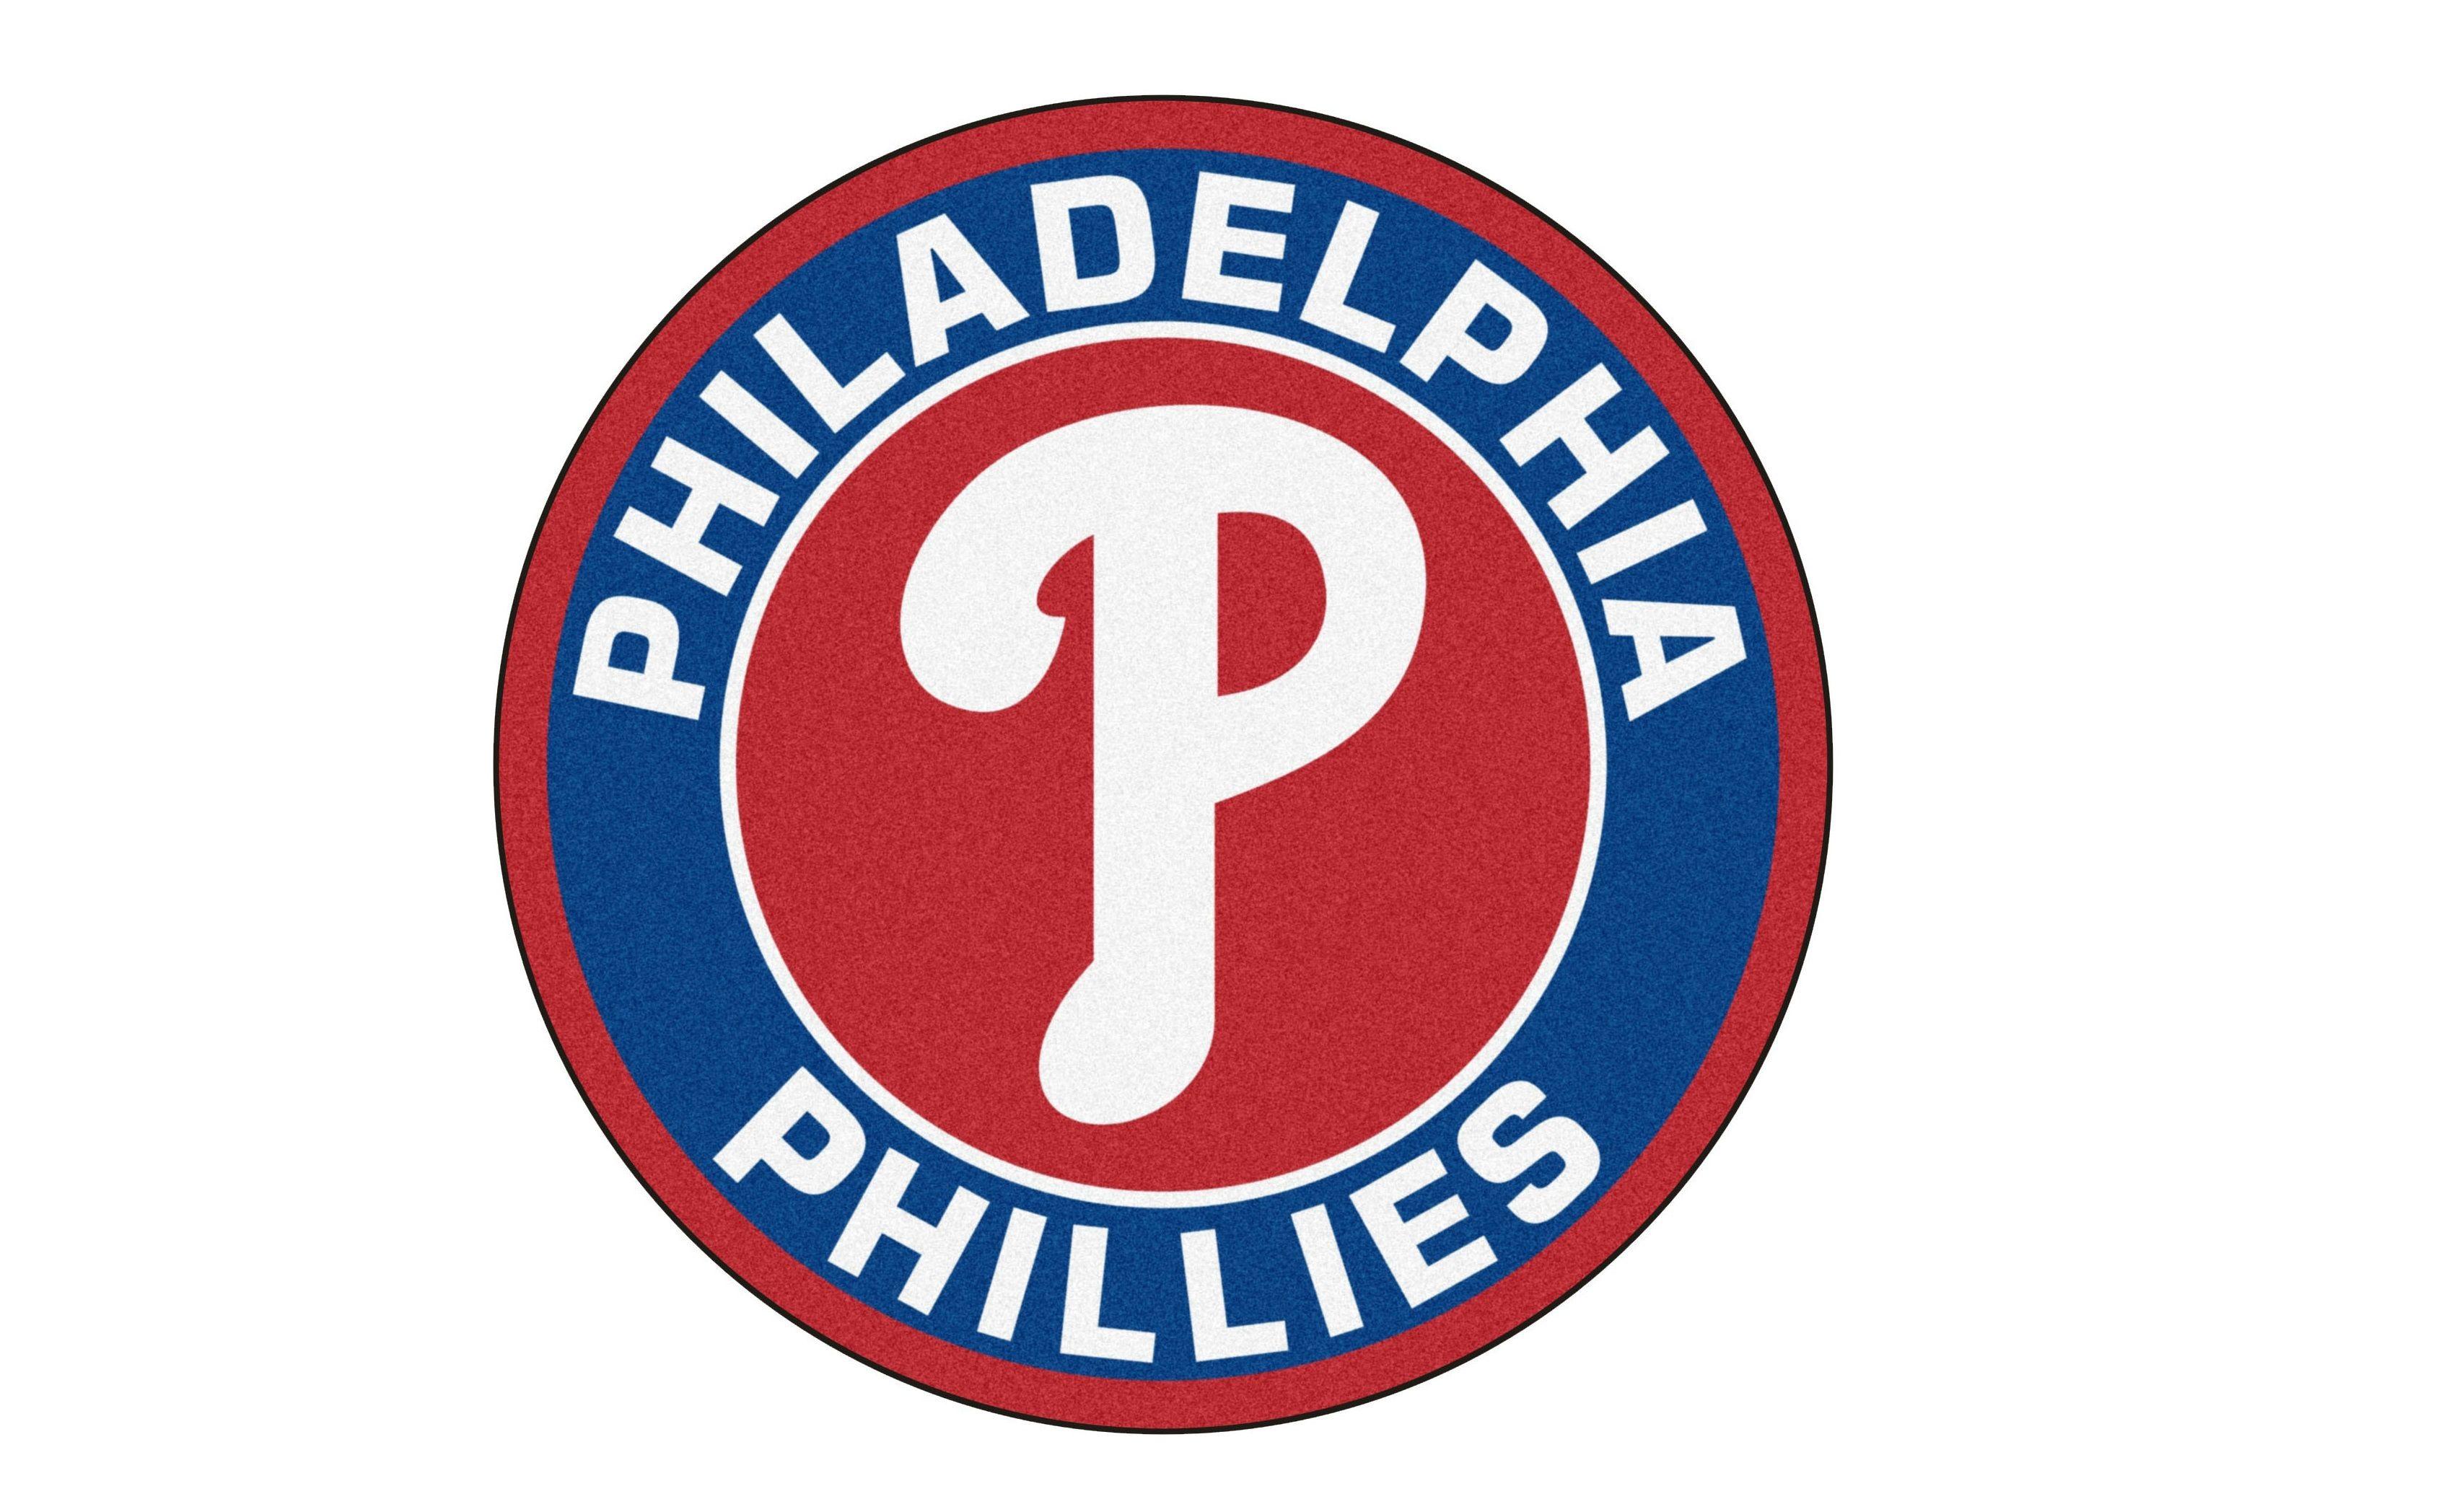 Philadelphia Phillies Wallpapers - Top Free Philadelphia Phillies  Backgrounds - WallpaperAccess